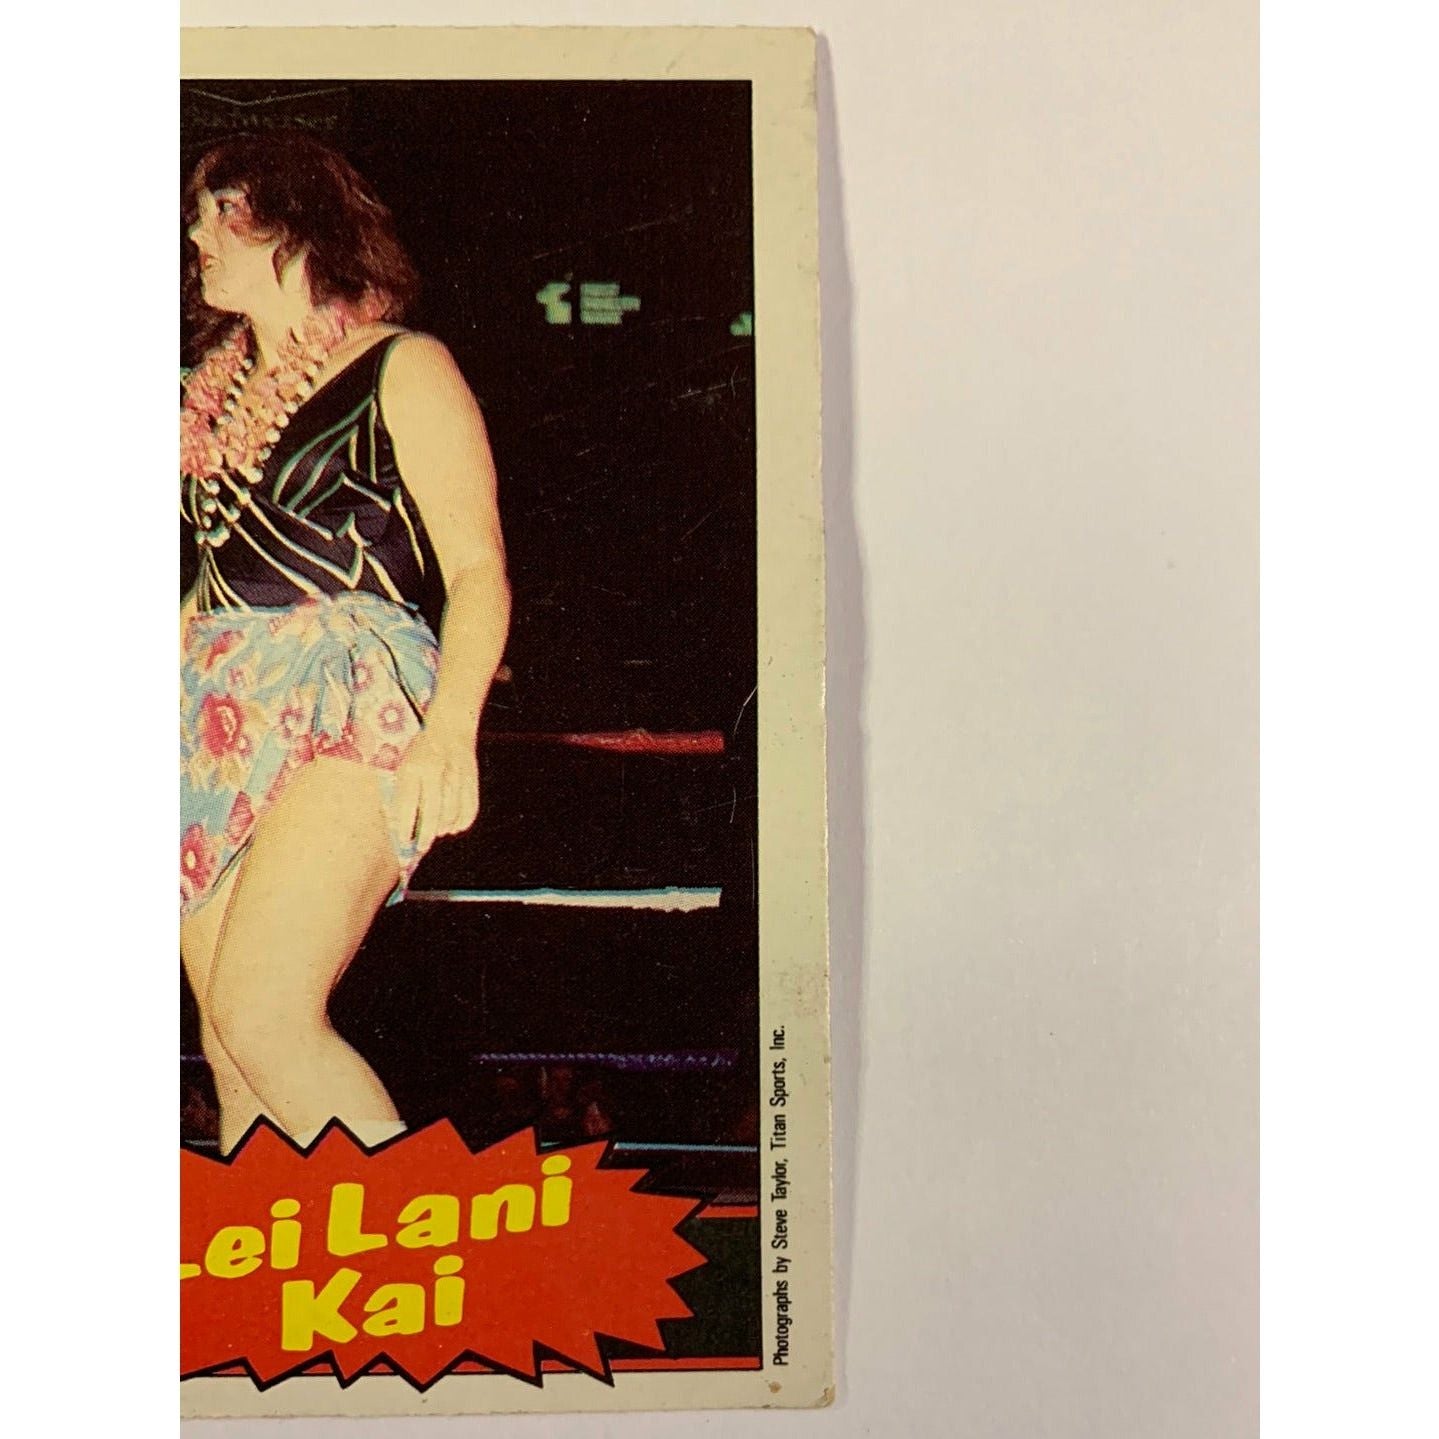  1985 Titan Sports Leí Lani Kai  Local Legends Cards & Collectibles